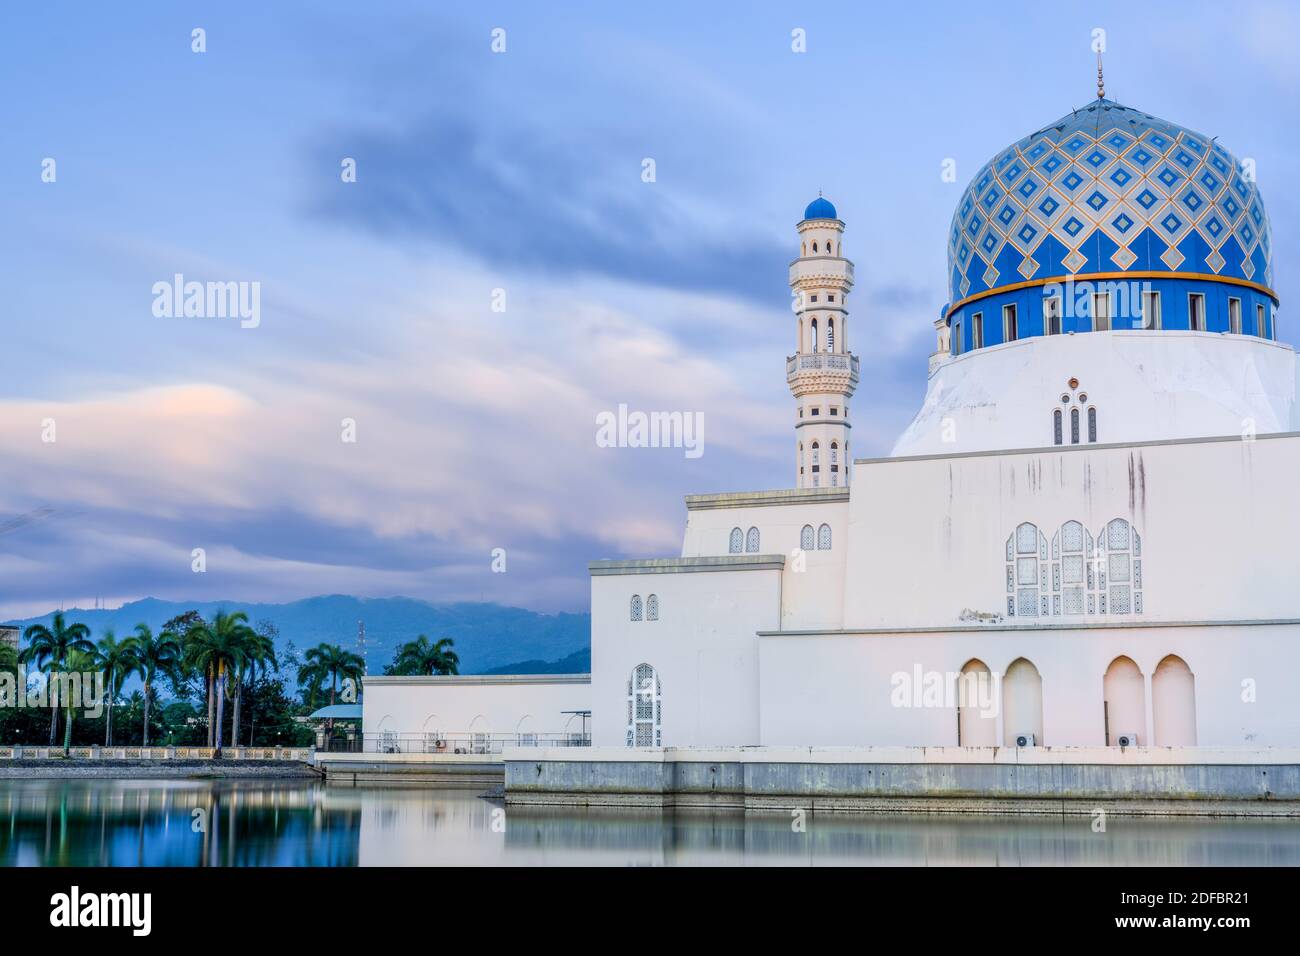 Kota Kinabalu City Mosque, known locally as Masjid Bandaraya Kota Kinabalu in Sabah, Malaysia. Stock Photo